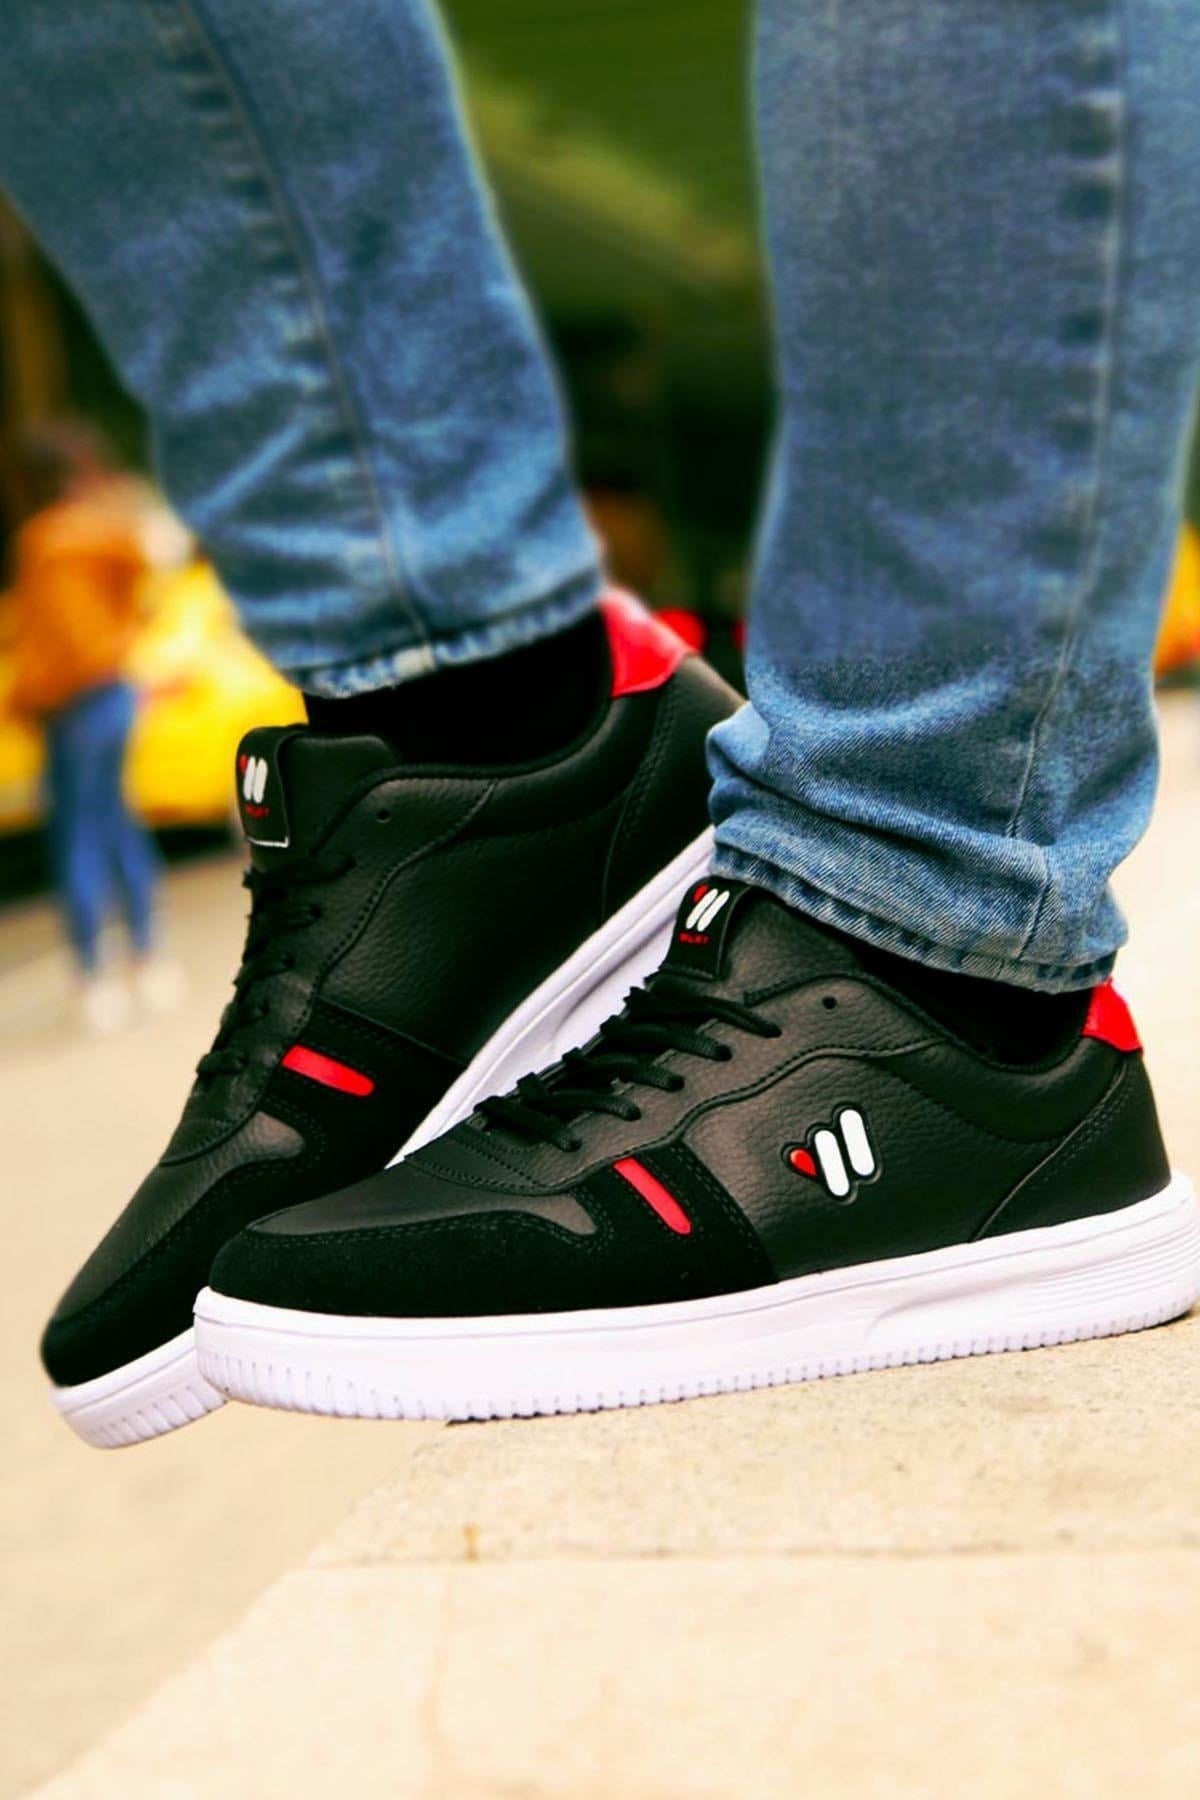 - Jason Black - Red Ultra Light Comfortable Flexible Men's Sports Sneaker Shoes